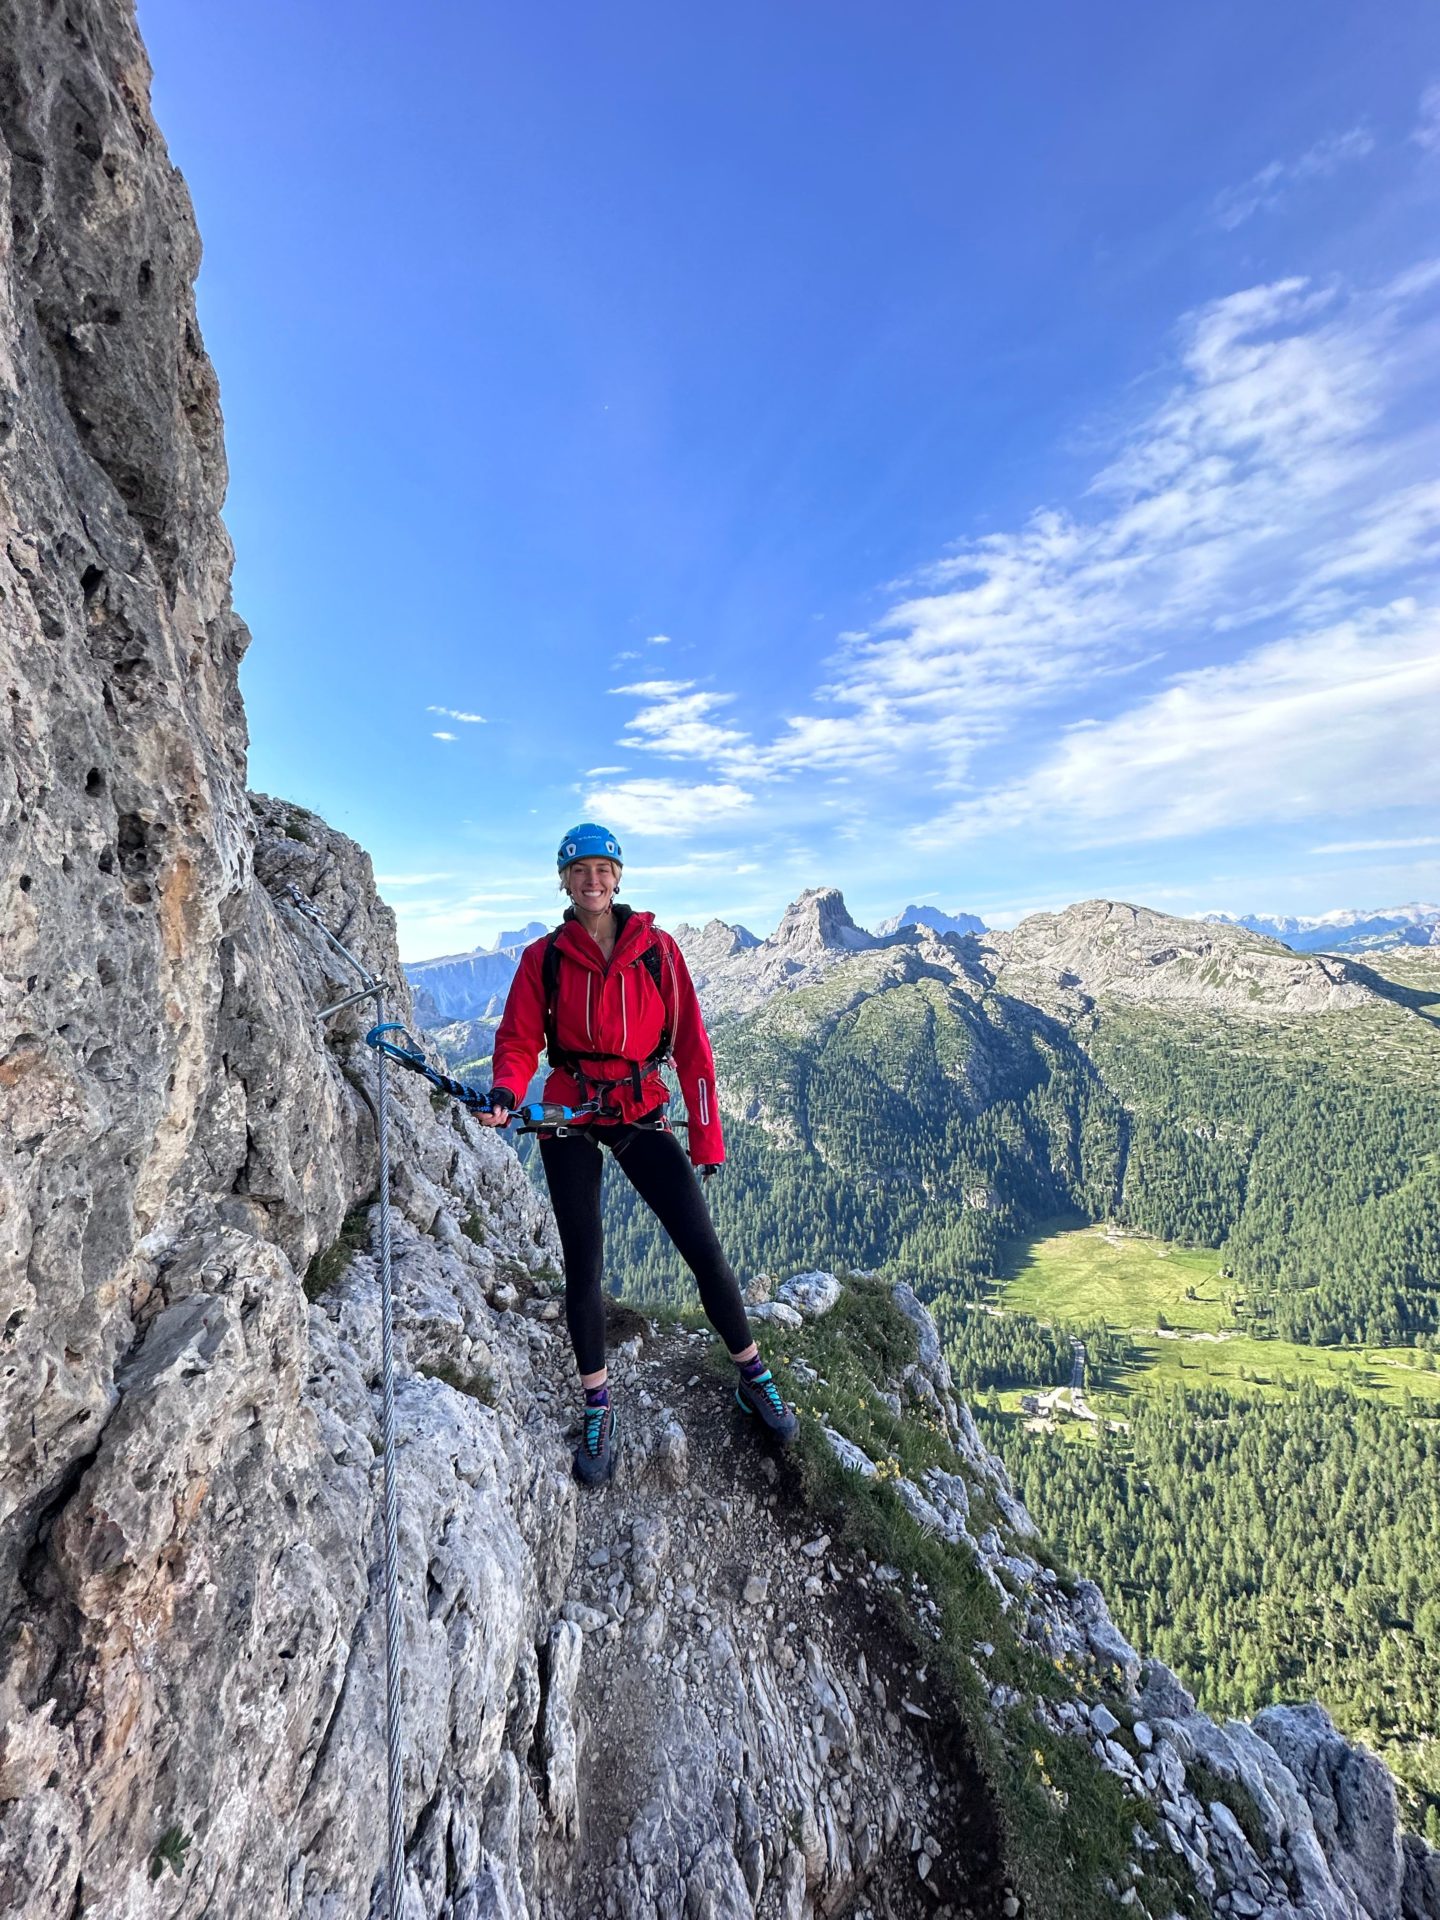 Zanna van Dijk on a via ferrata in the Dolomites